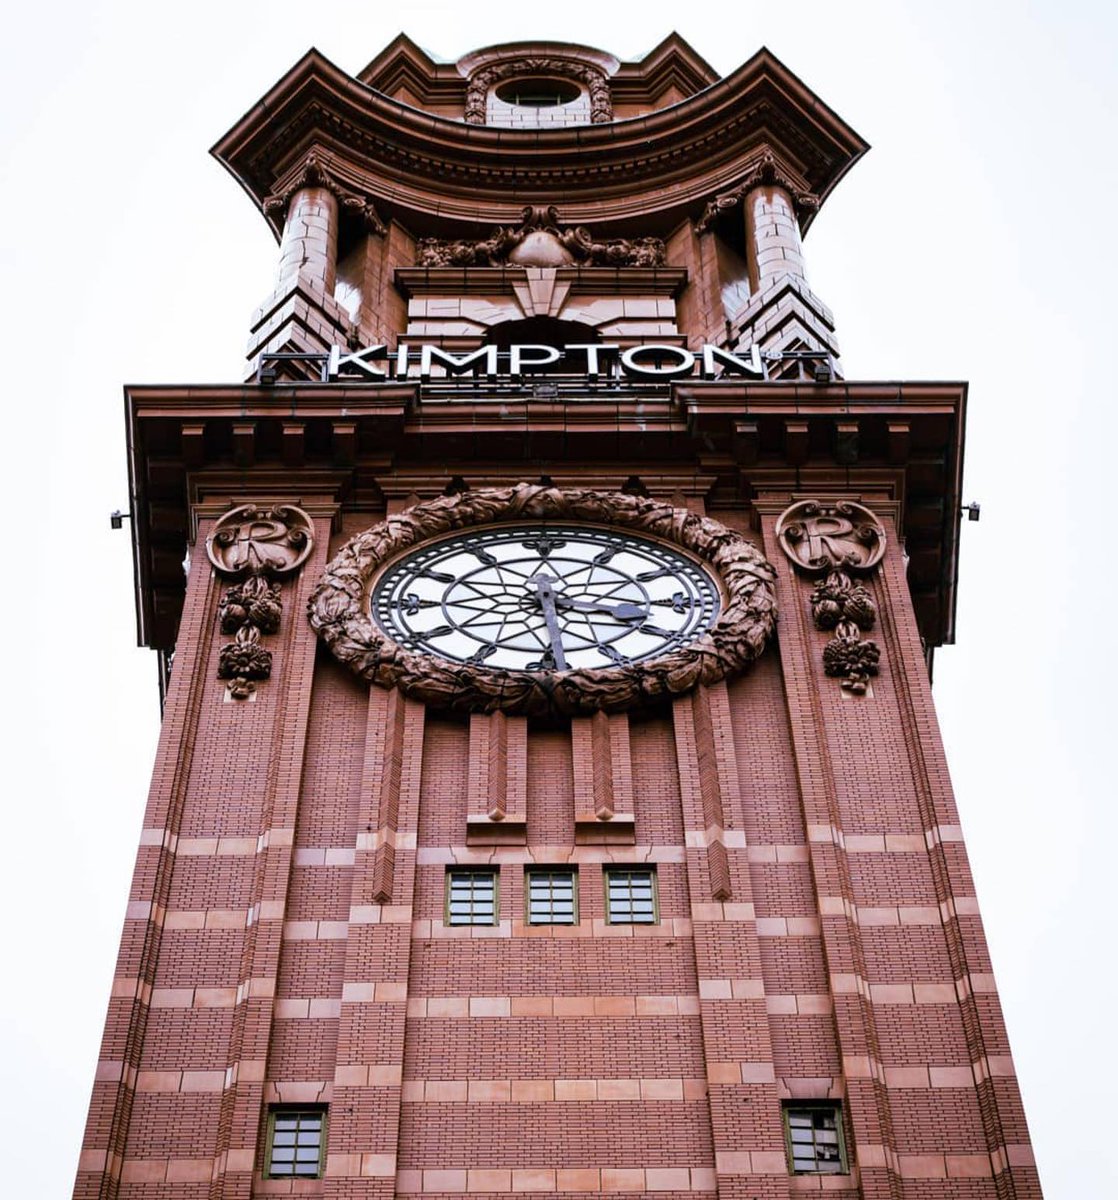 What time is it? 🕰 
.
We agree it’s a very nice clock picsbymichaelt 
.
#kimptonclocktower #kimptonclocktowerhotel 
#manchester #clocktower #clockwork #bigclock